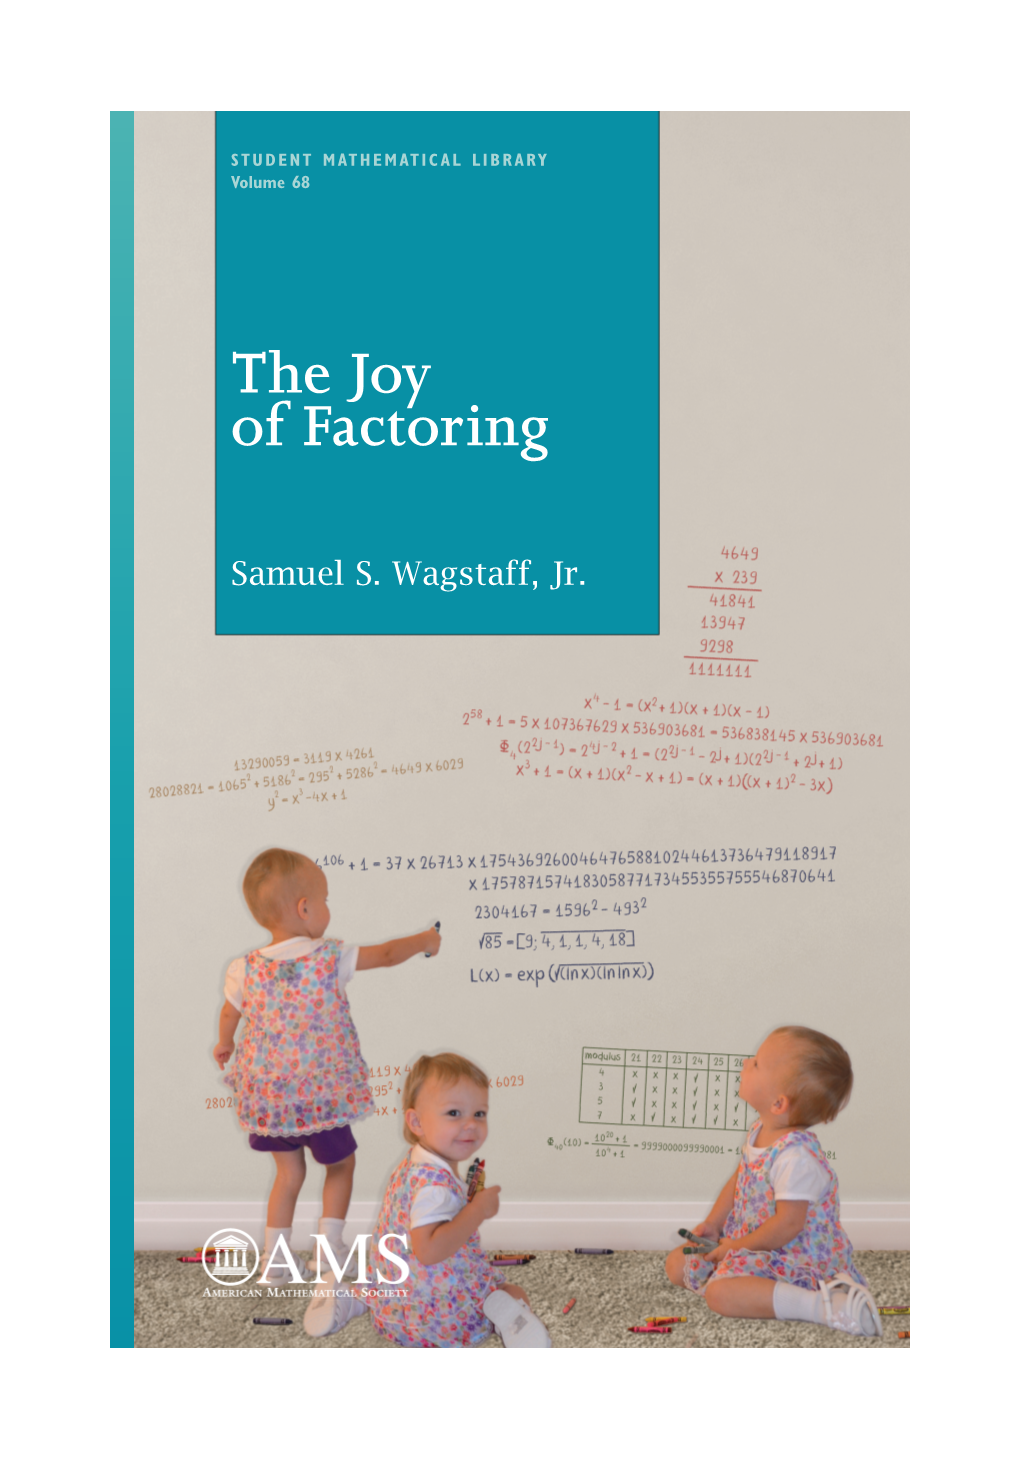 The Joy of Factoring